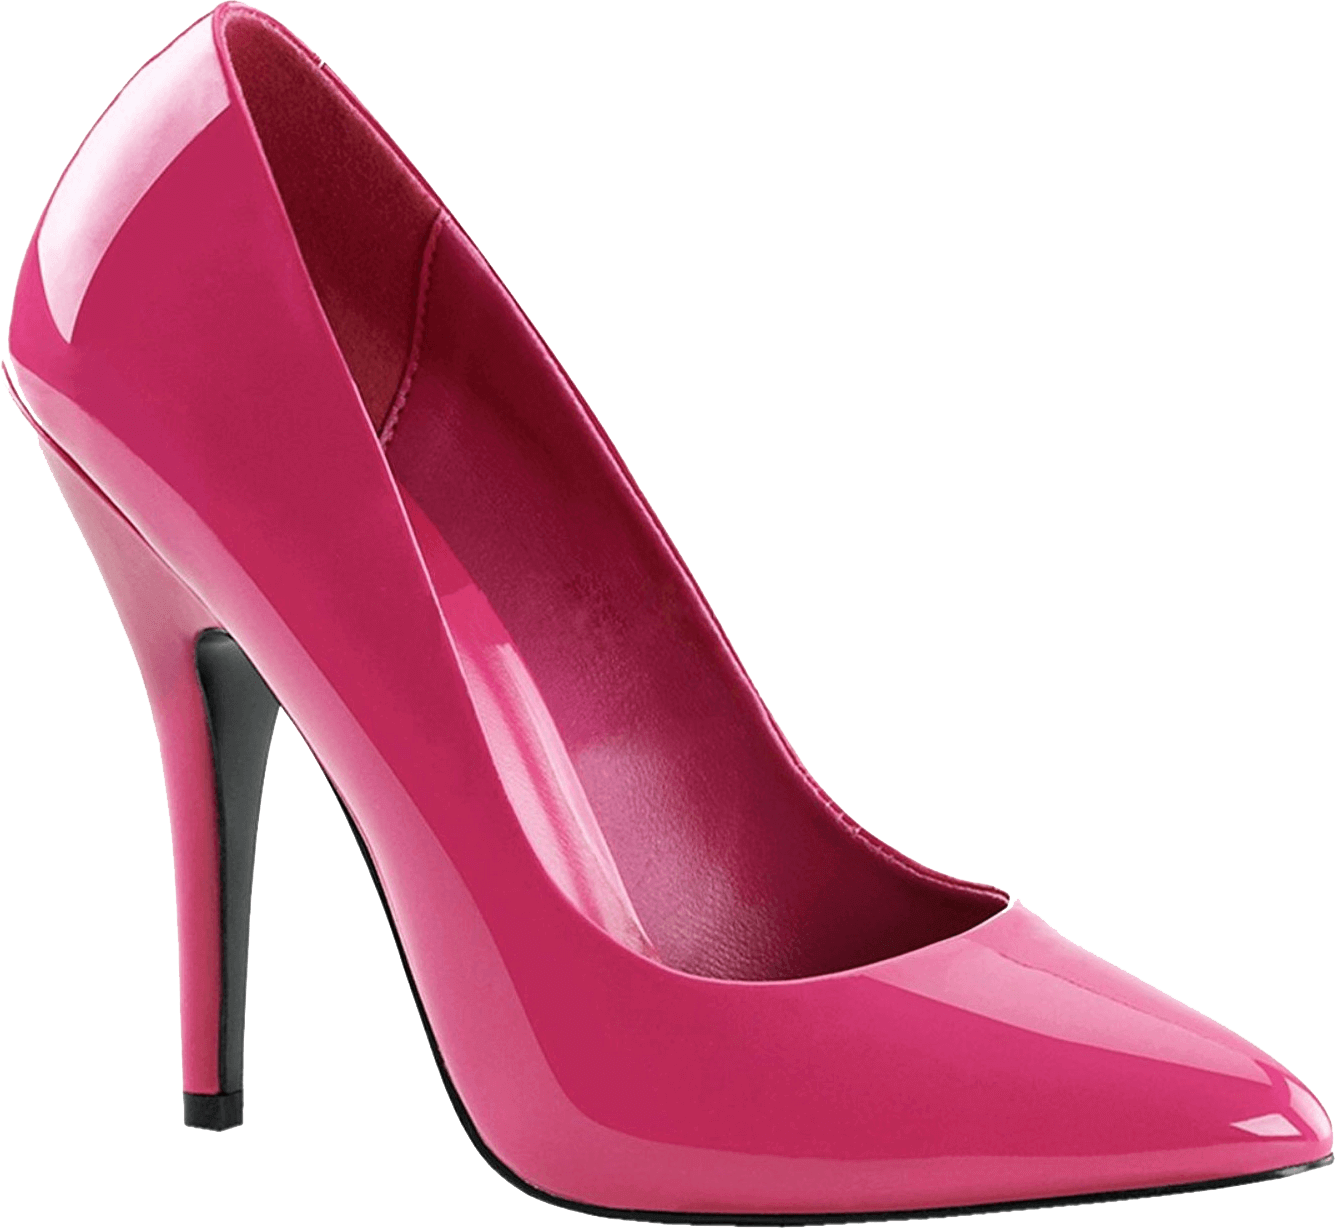 Best Pink Heels For the Holidays | POPSUGAR Fashion